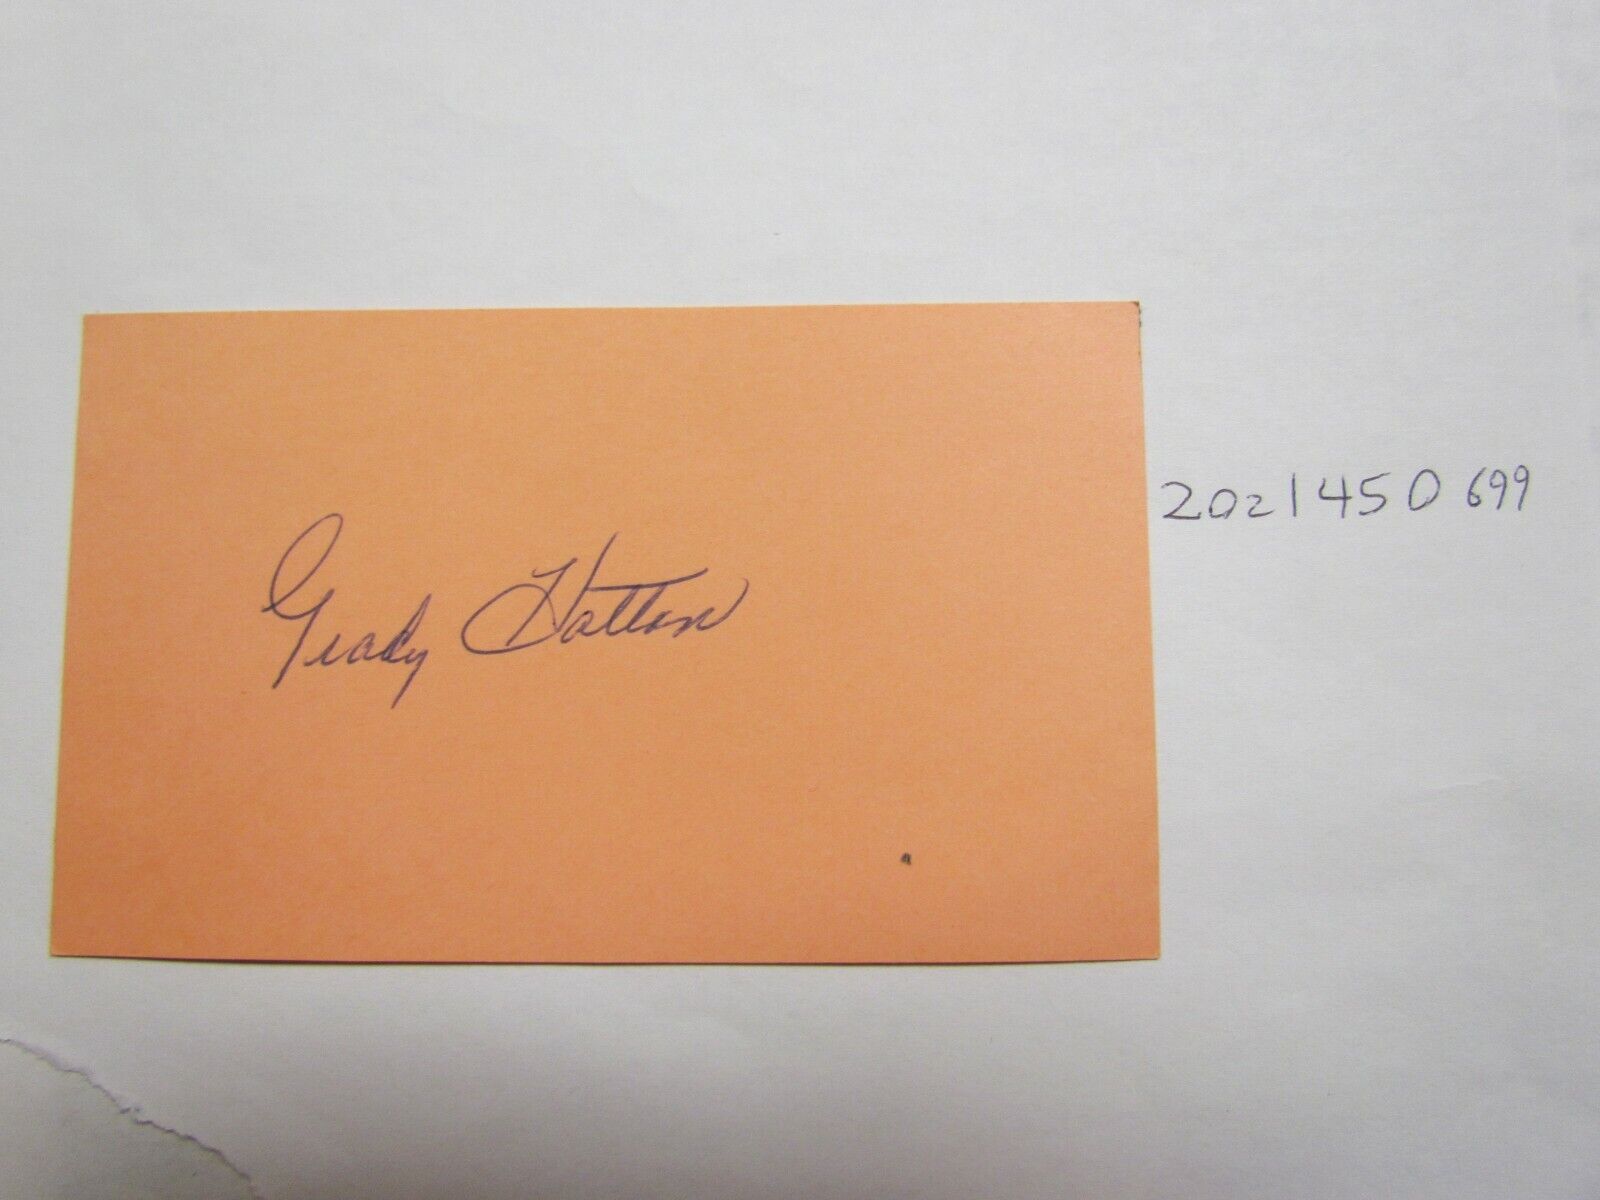 Grady Hatton AUTOGRAPHED INDEX CARD JSA AUCTION CERTIFIED 